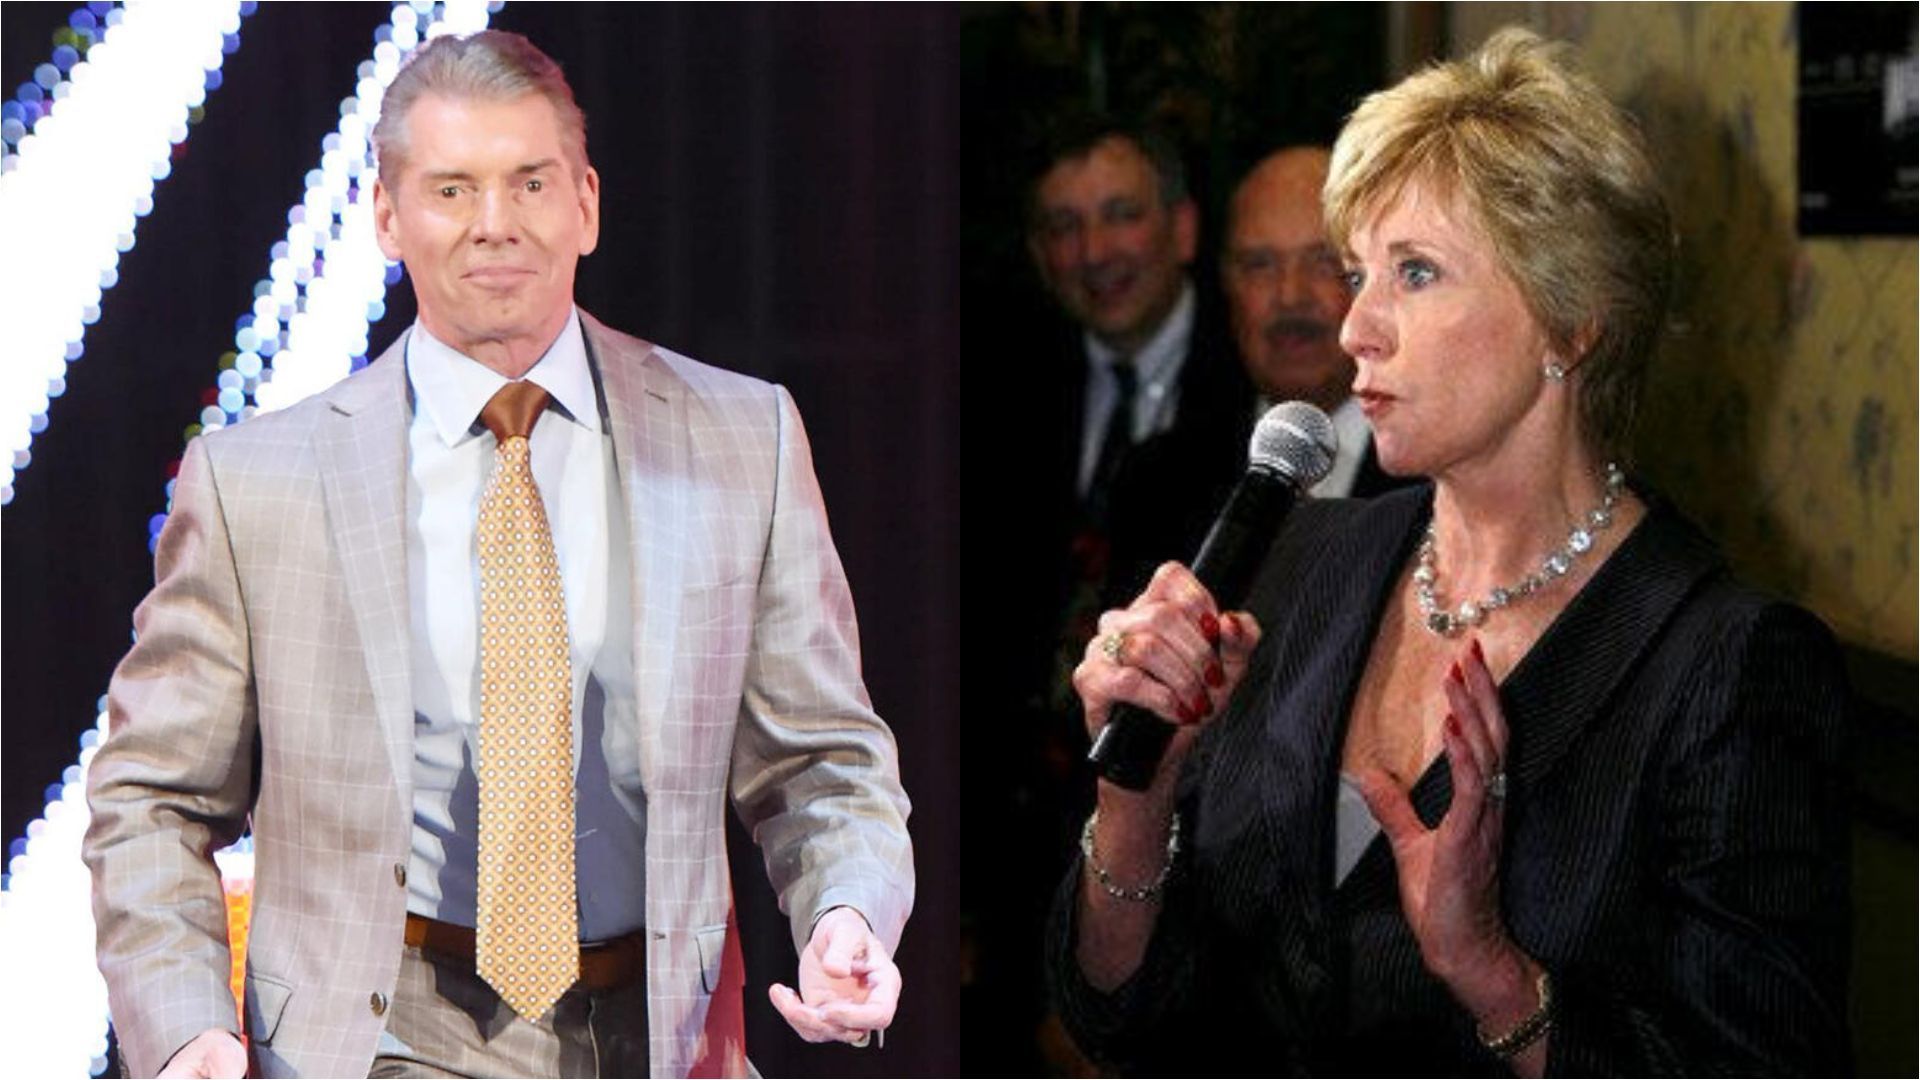 Vince McMahon and Linda McMahon (Images via WWE.com)